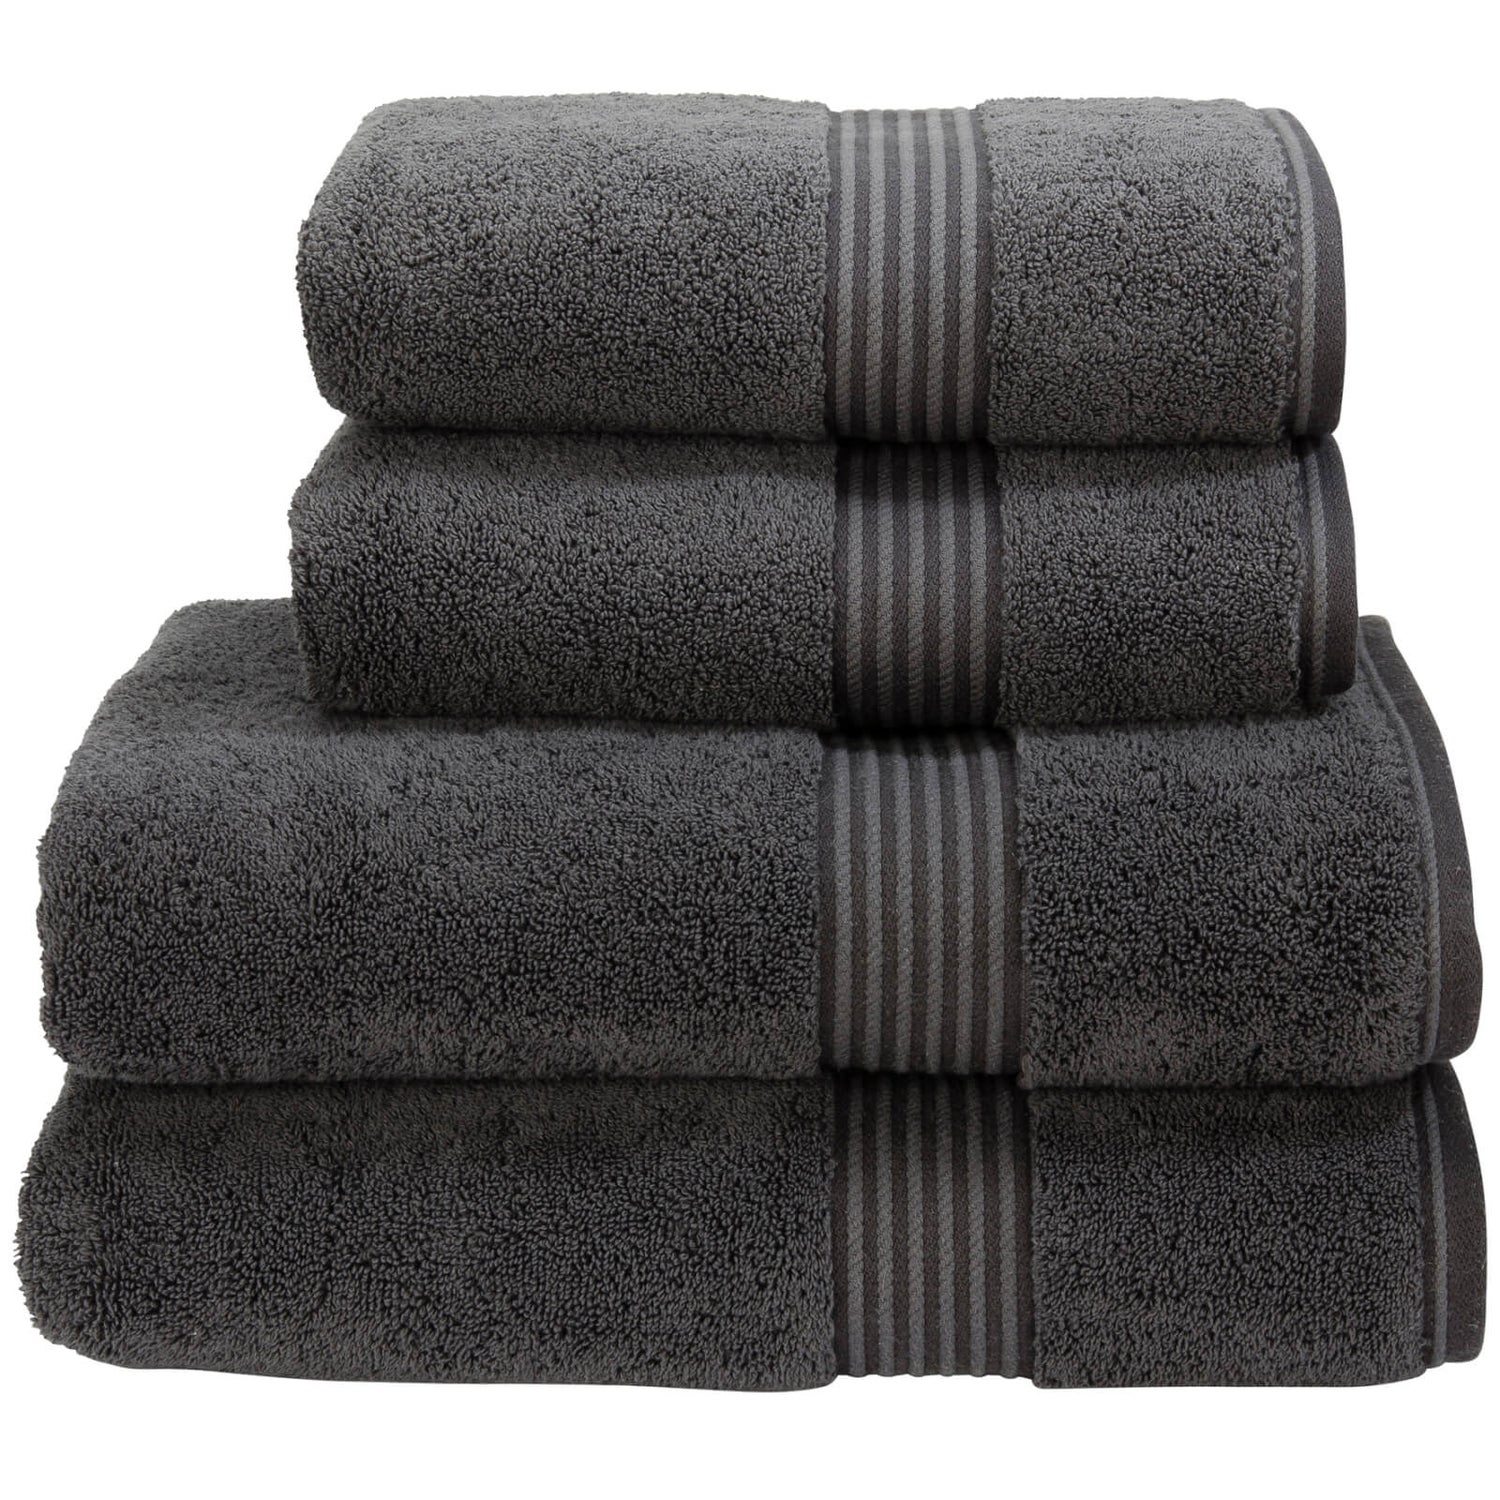 Christy Supreme Hygro Towels - Graphite - Bath Sheet (Set of 2)